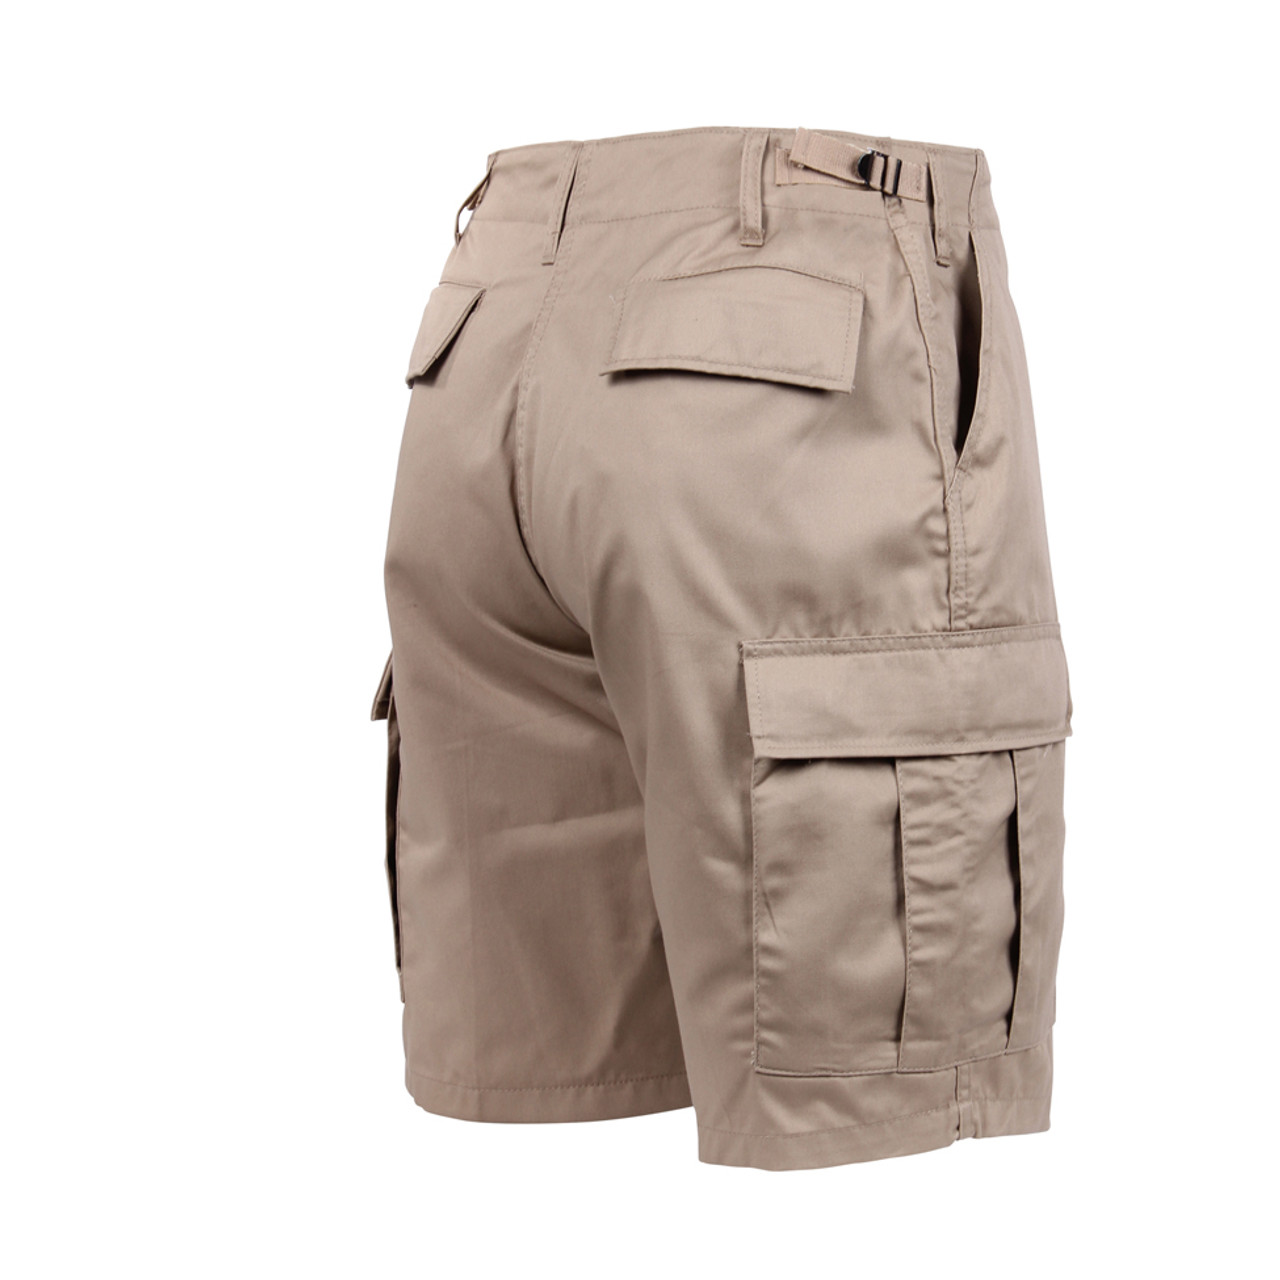 Shop Khaki Tan BDU Military Shorts - Fatigues Army Navy Gear